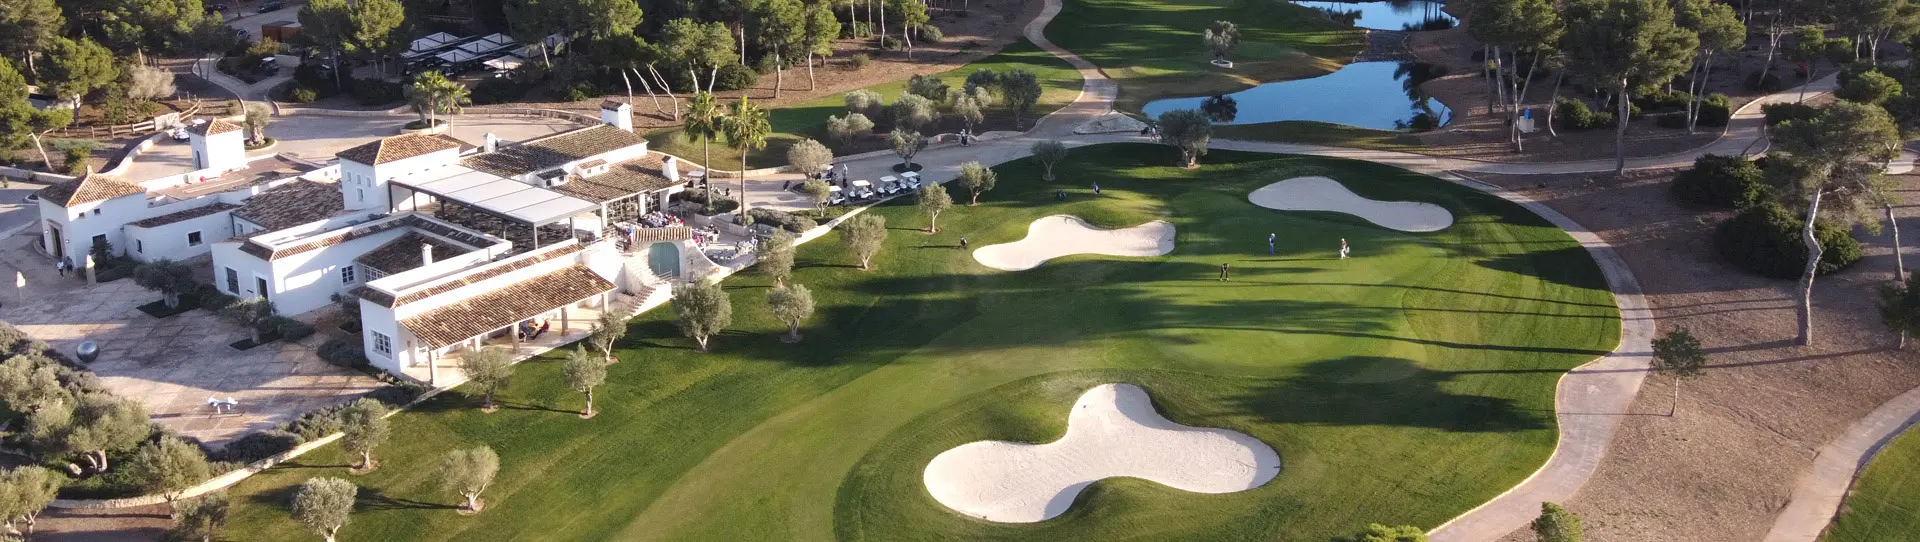 Spain golf courses - T-Golf Calvia (T-Golf Country Club) - Photo 1